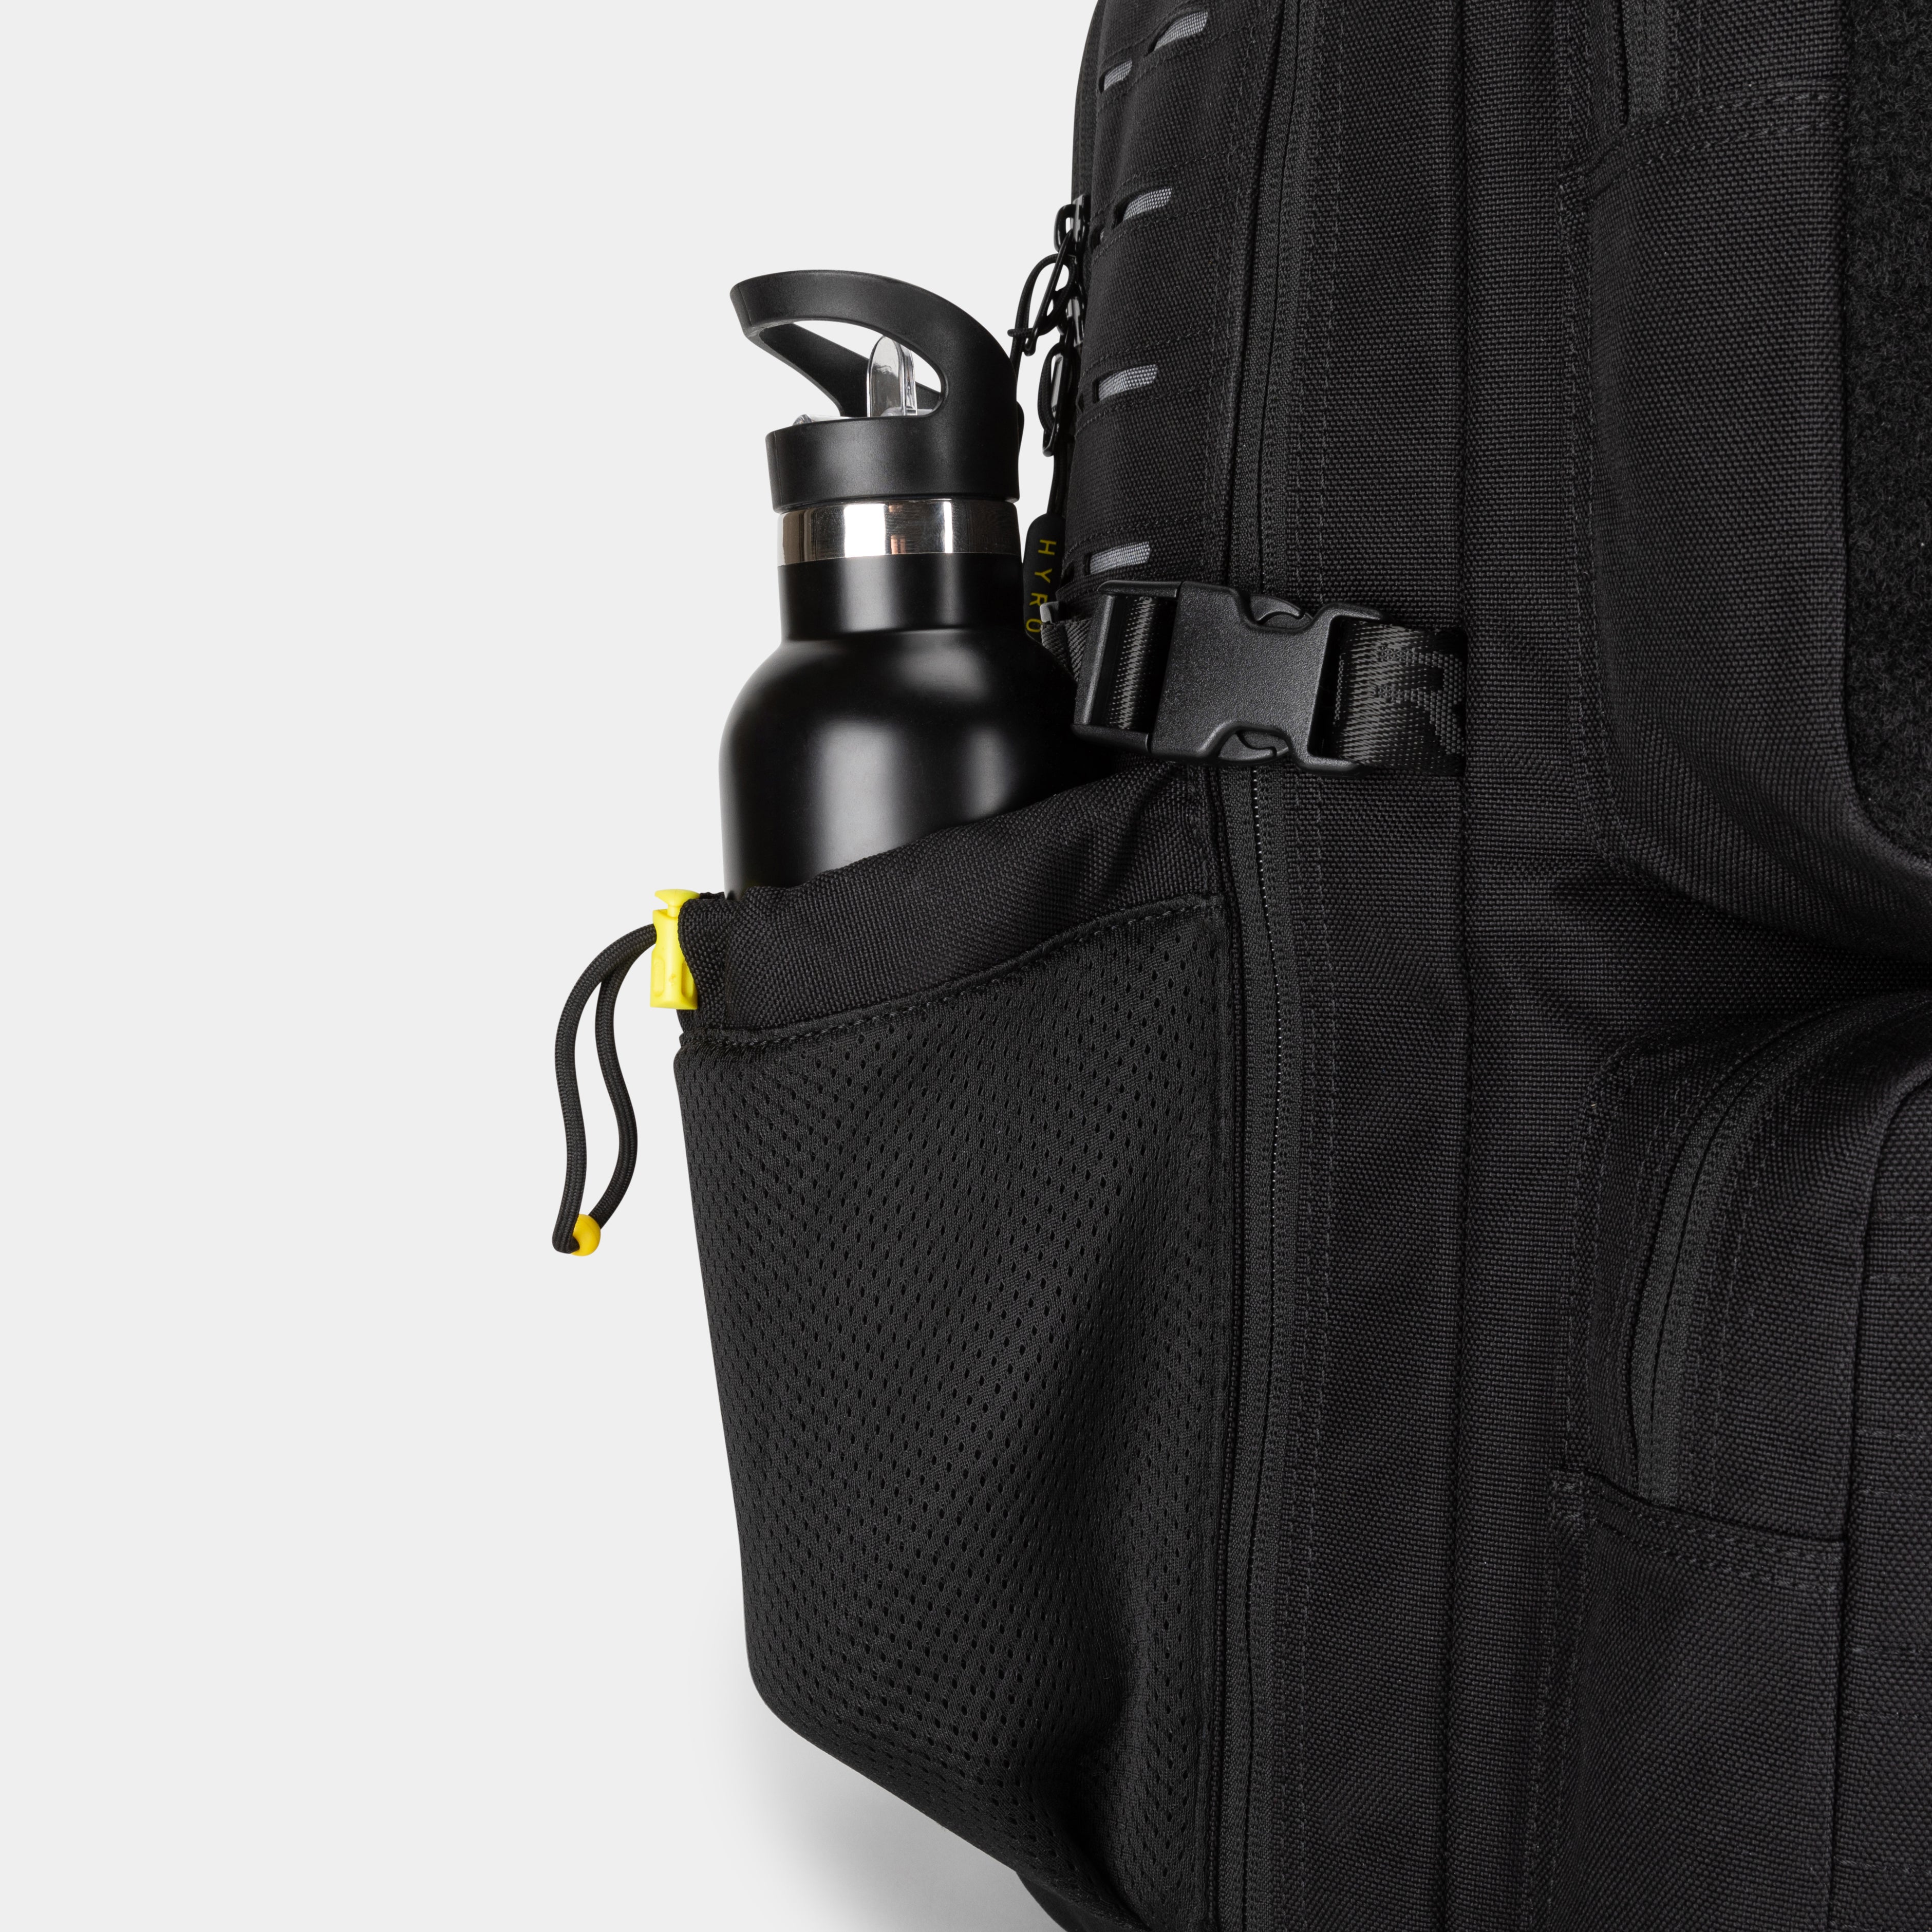 Built for Athletes™ Backpacks Hyrox x BFA 35L Pro Backpack